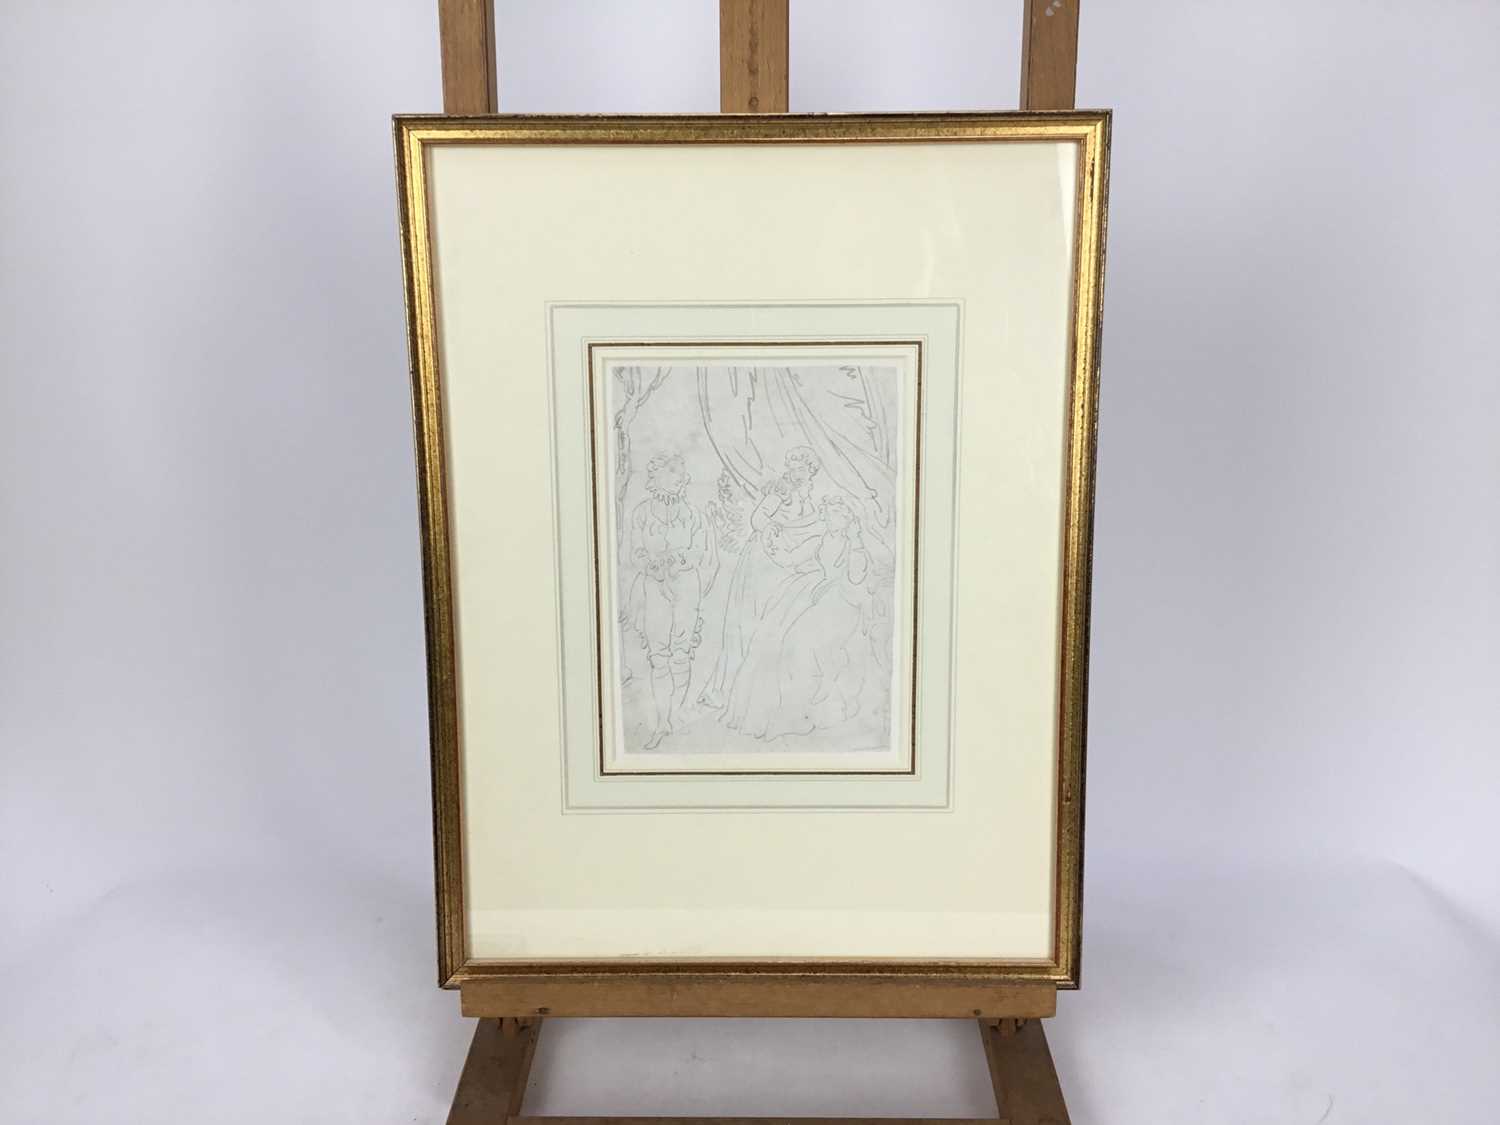 Thomas Rowlandson (1756-1827) pencil drawing - The Intruder, in glazed gilt frame Provenance: Chri - Image 2 of 5